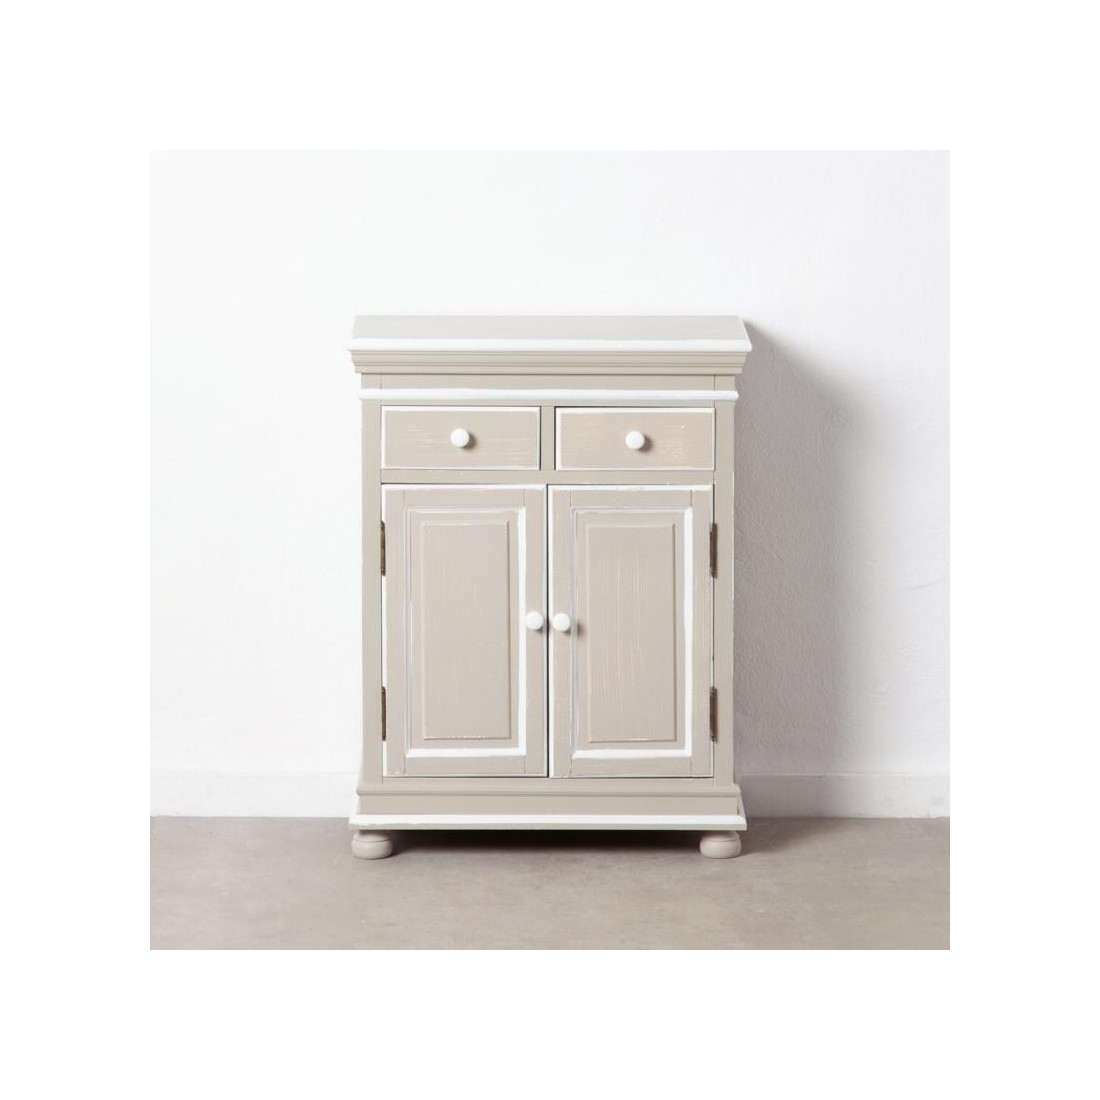 https://tousmesmeubles.com/84878-thickbox_default/meuble-d-entree-2-portes-2-tiroirs-boisgris-blanc-perla.jpg